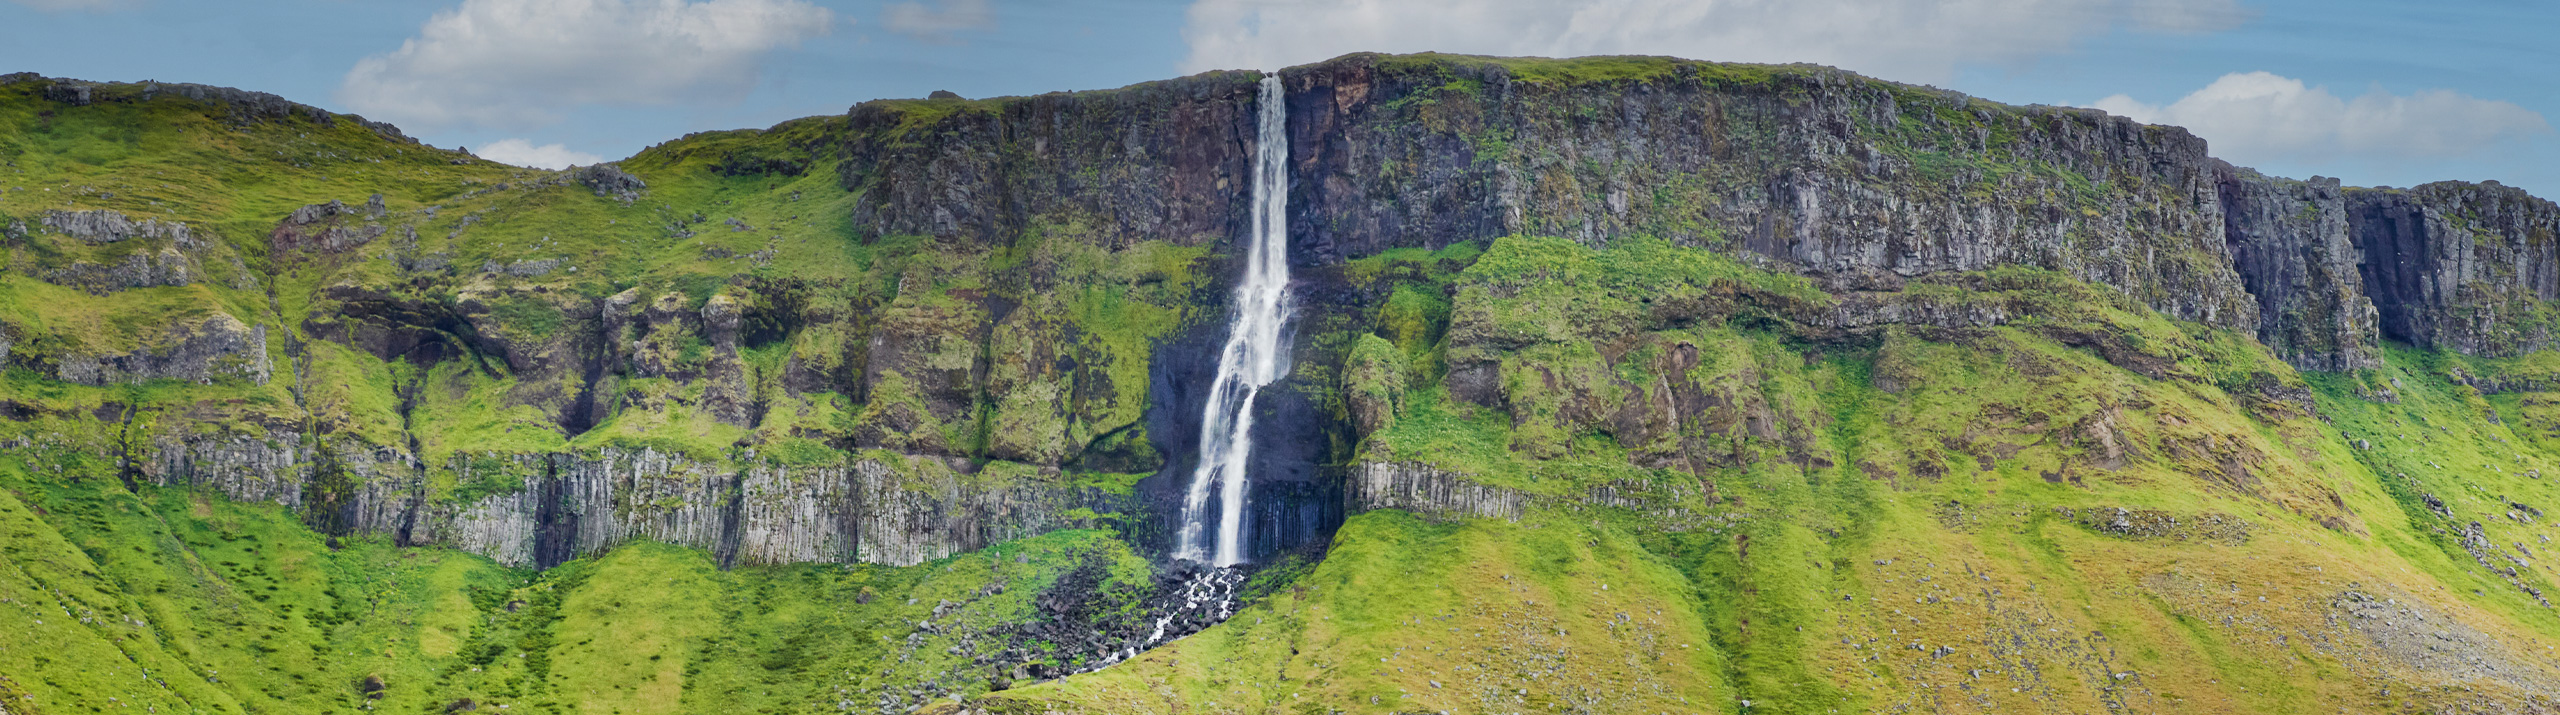 Bjarnarfoss vandfaldet - vandfald i Island